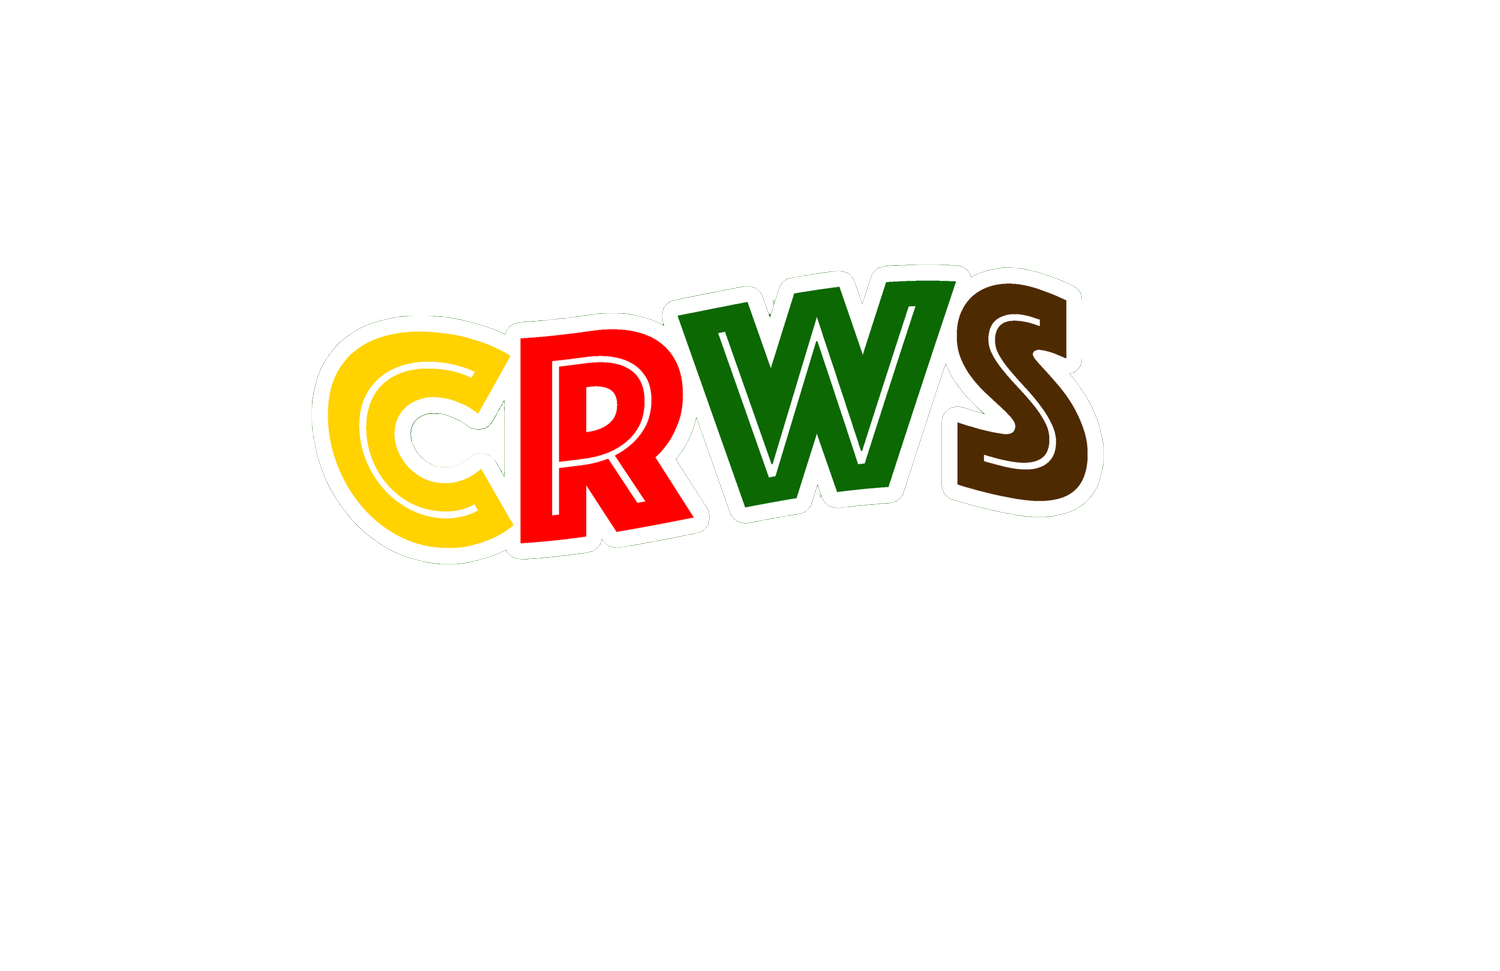 CRWS